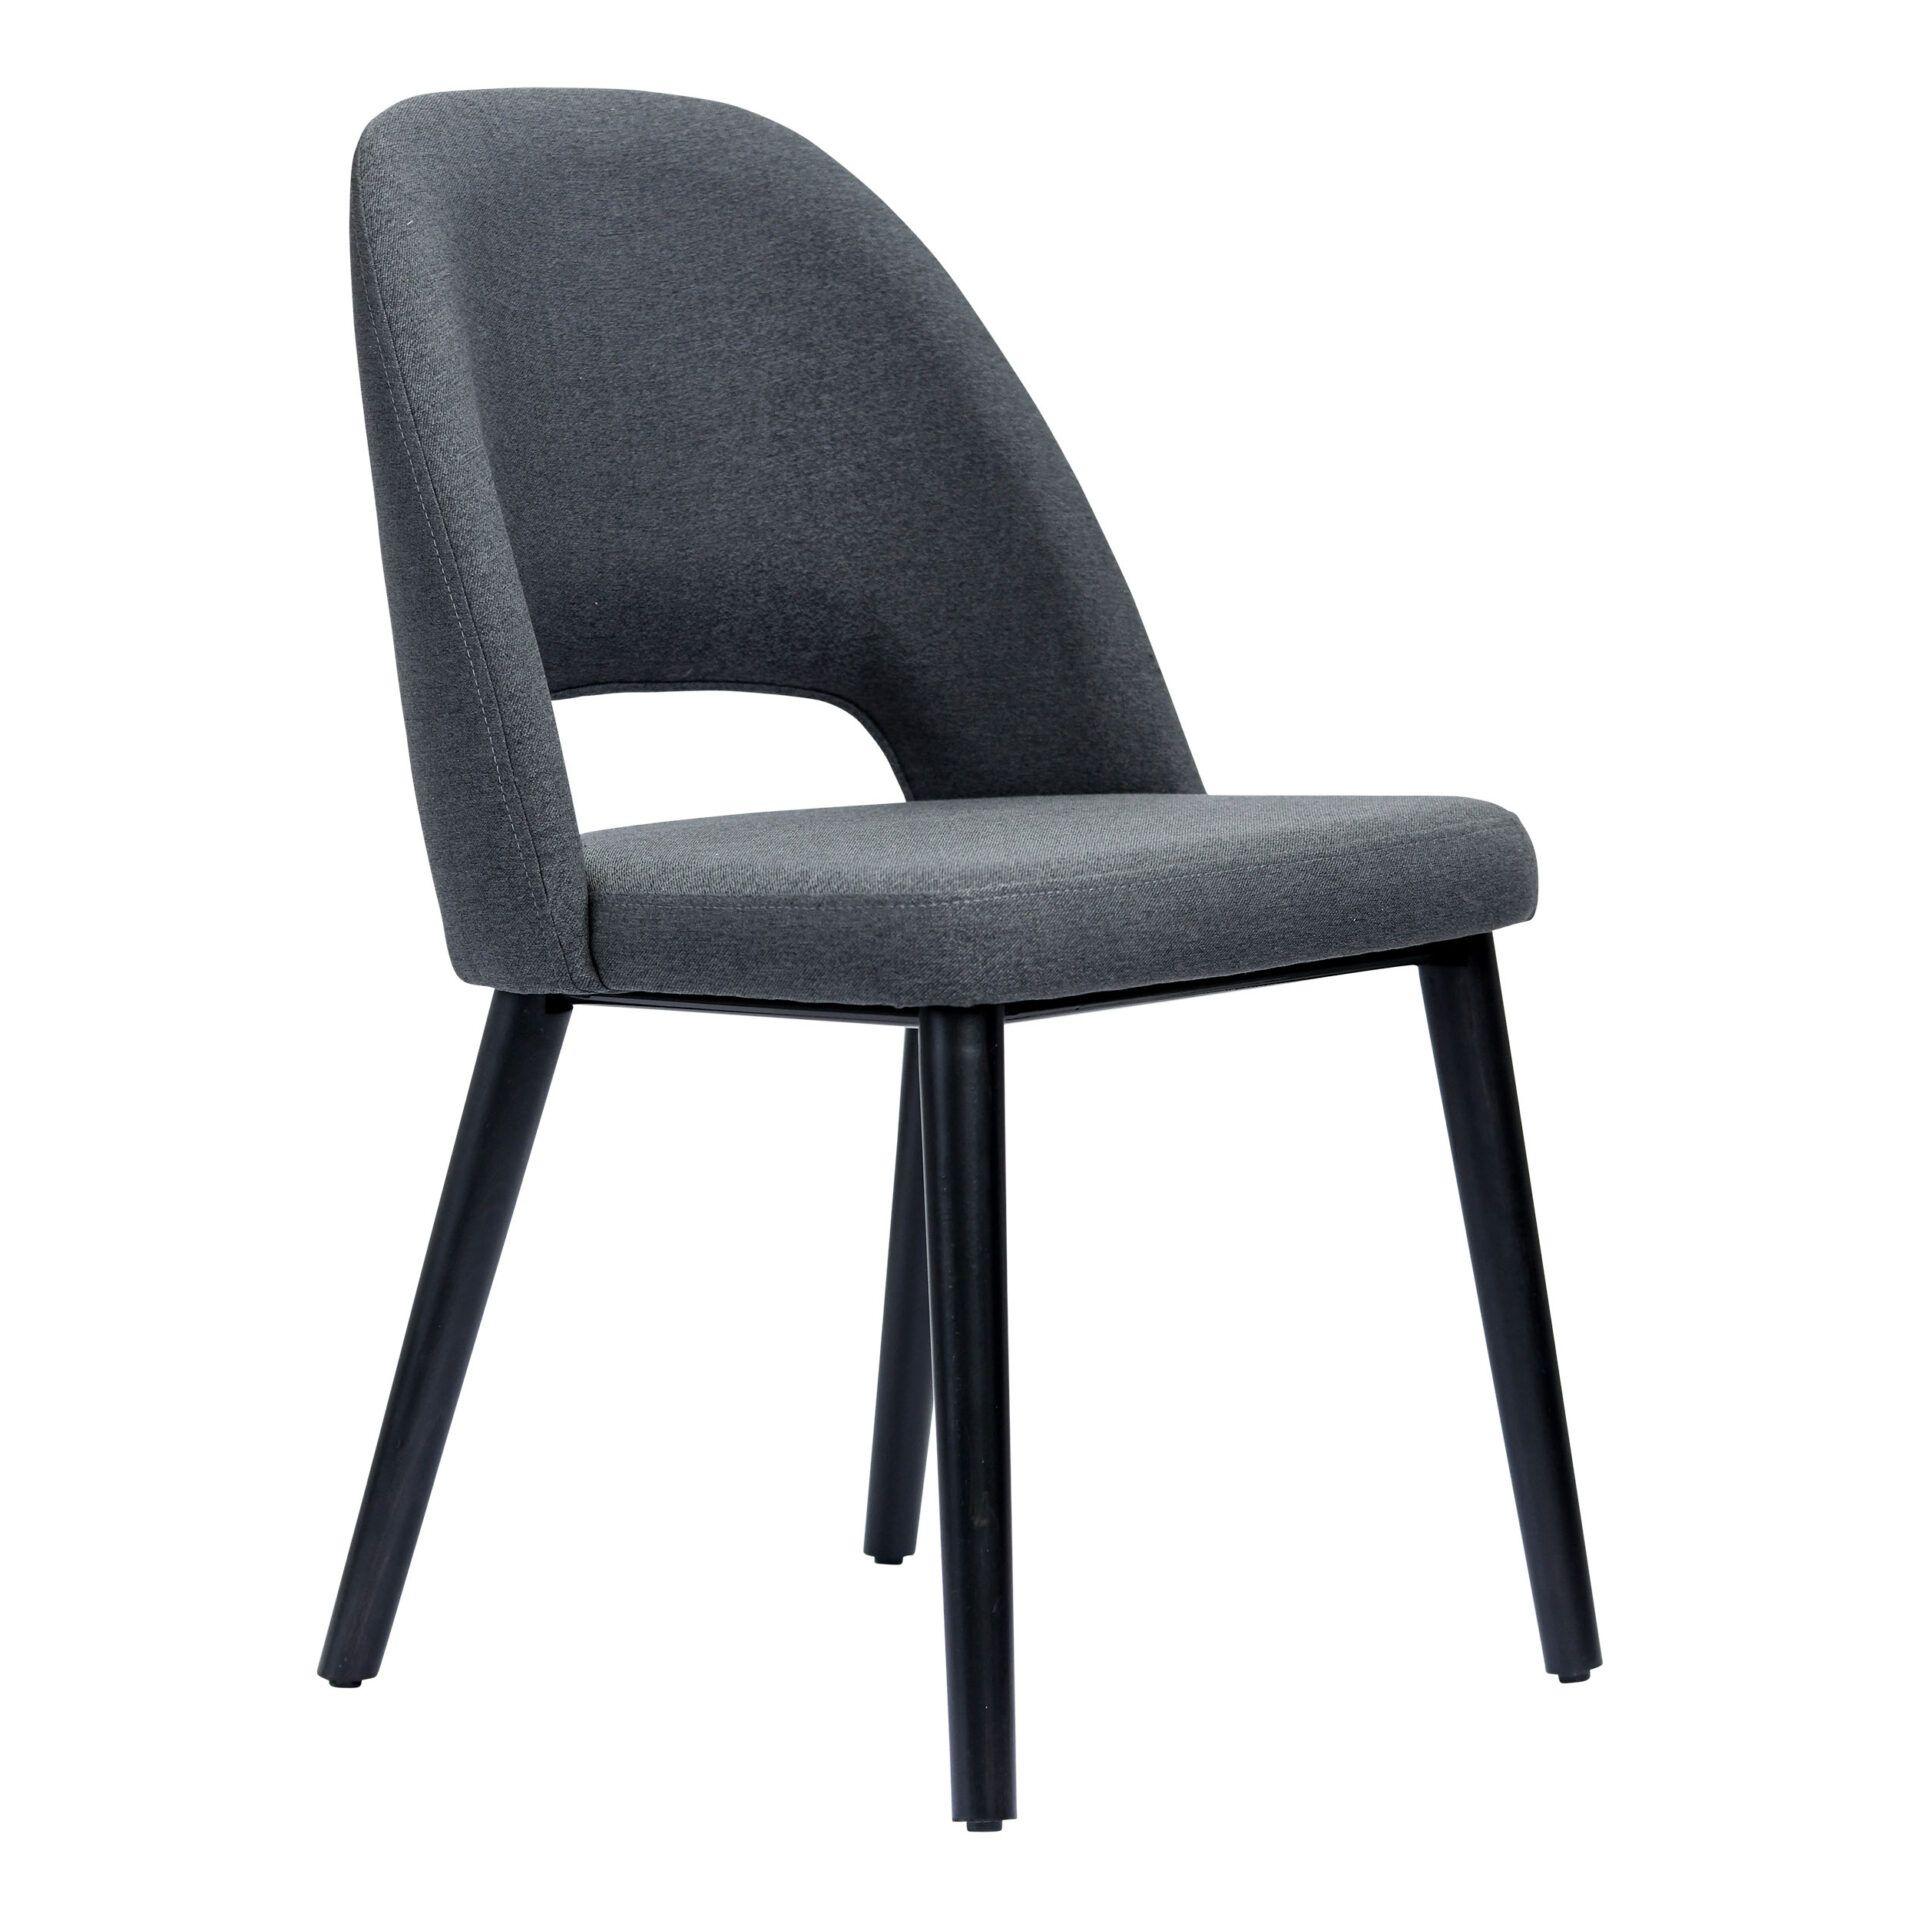 Semifreddo Chair - Black Legs/Anthracite Woven Fabric